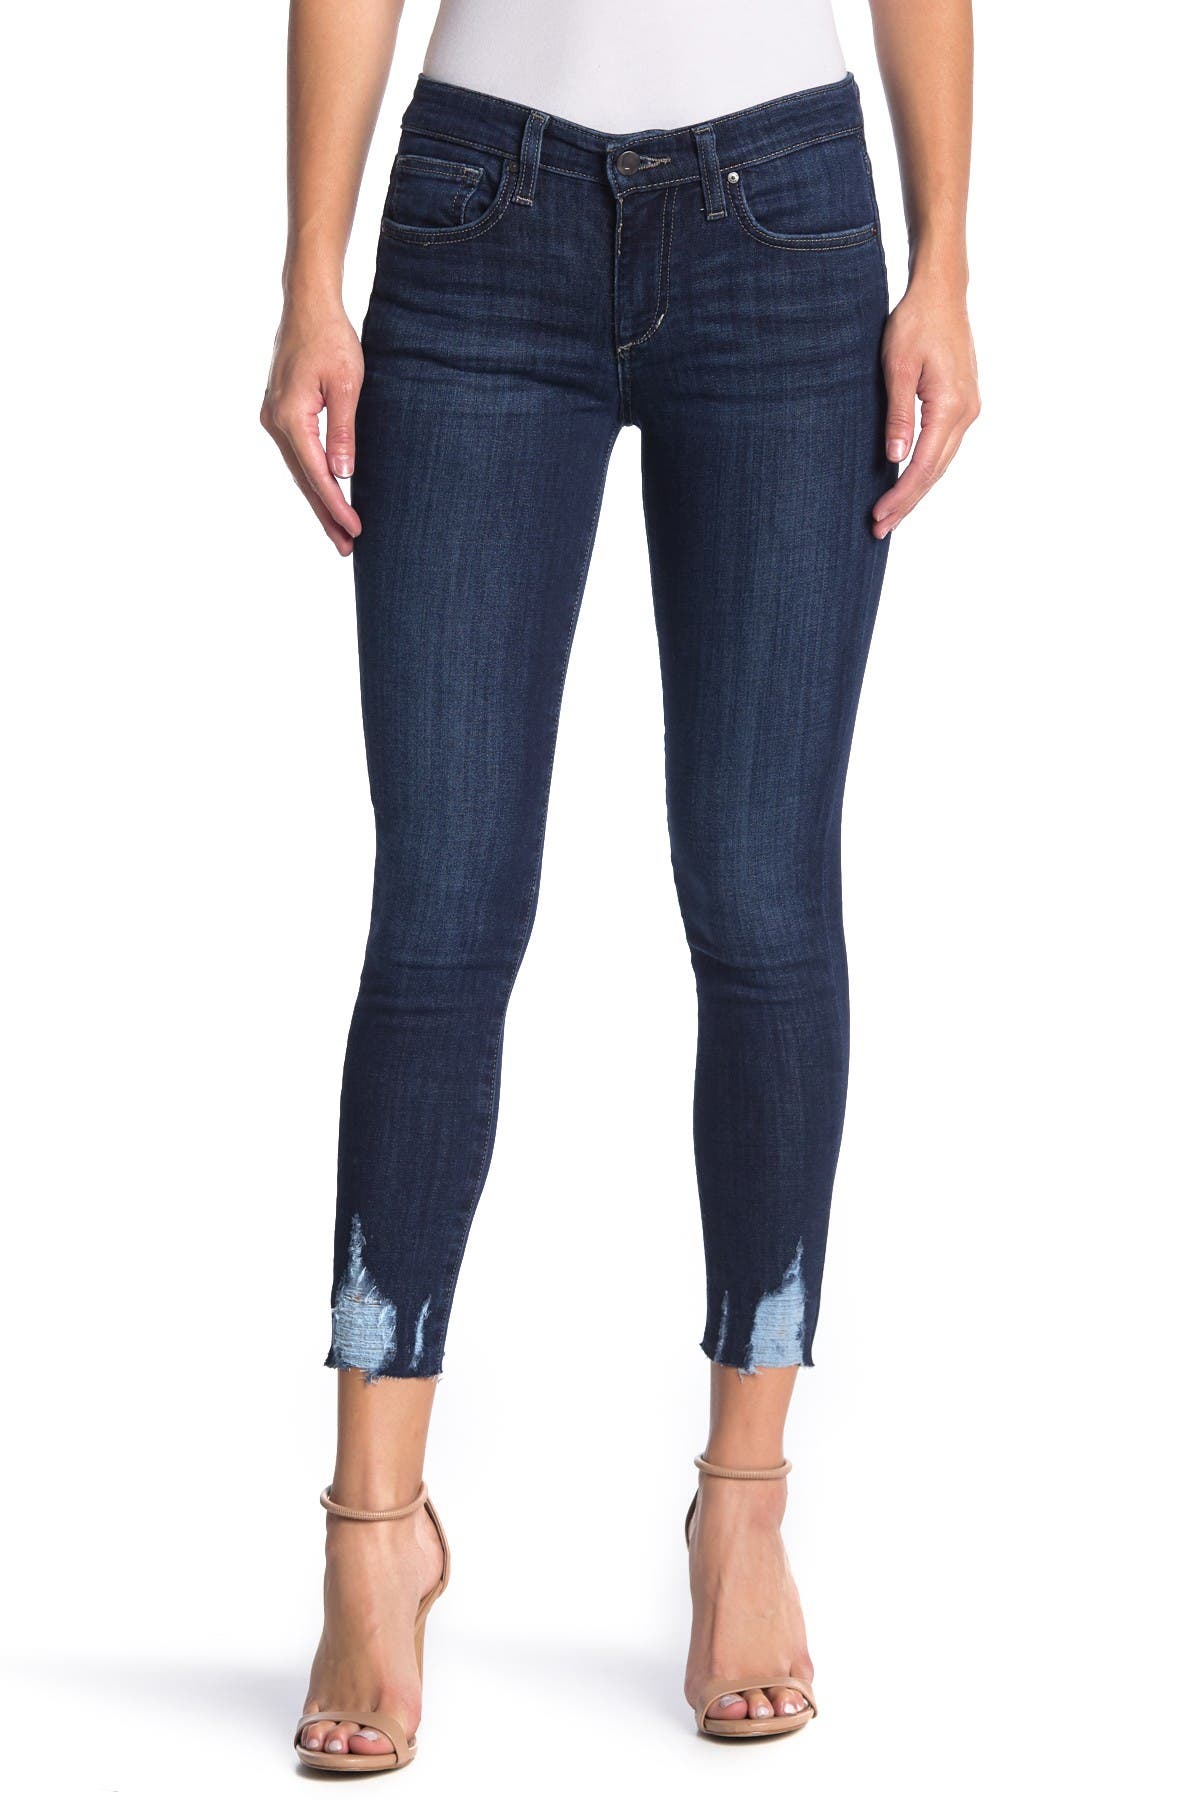 nordstrom rack cropped jeans